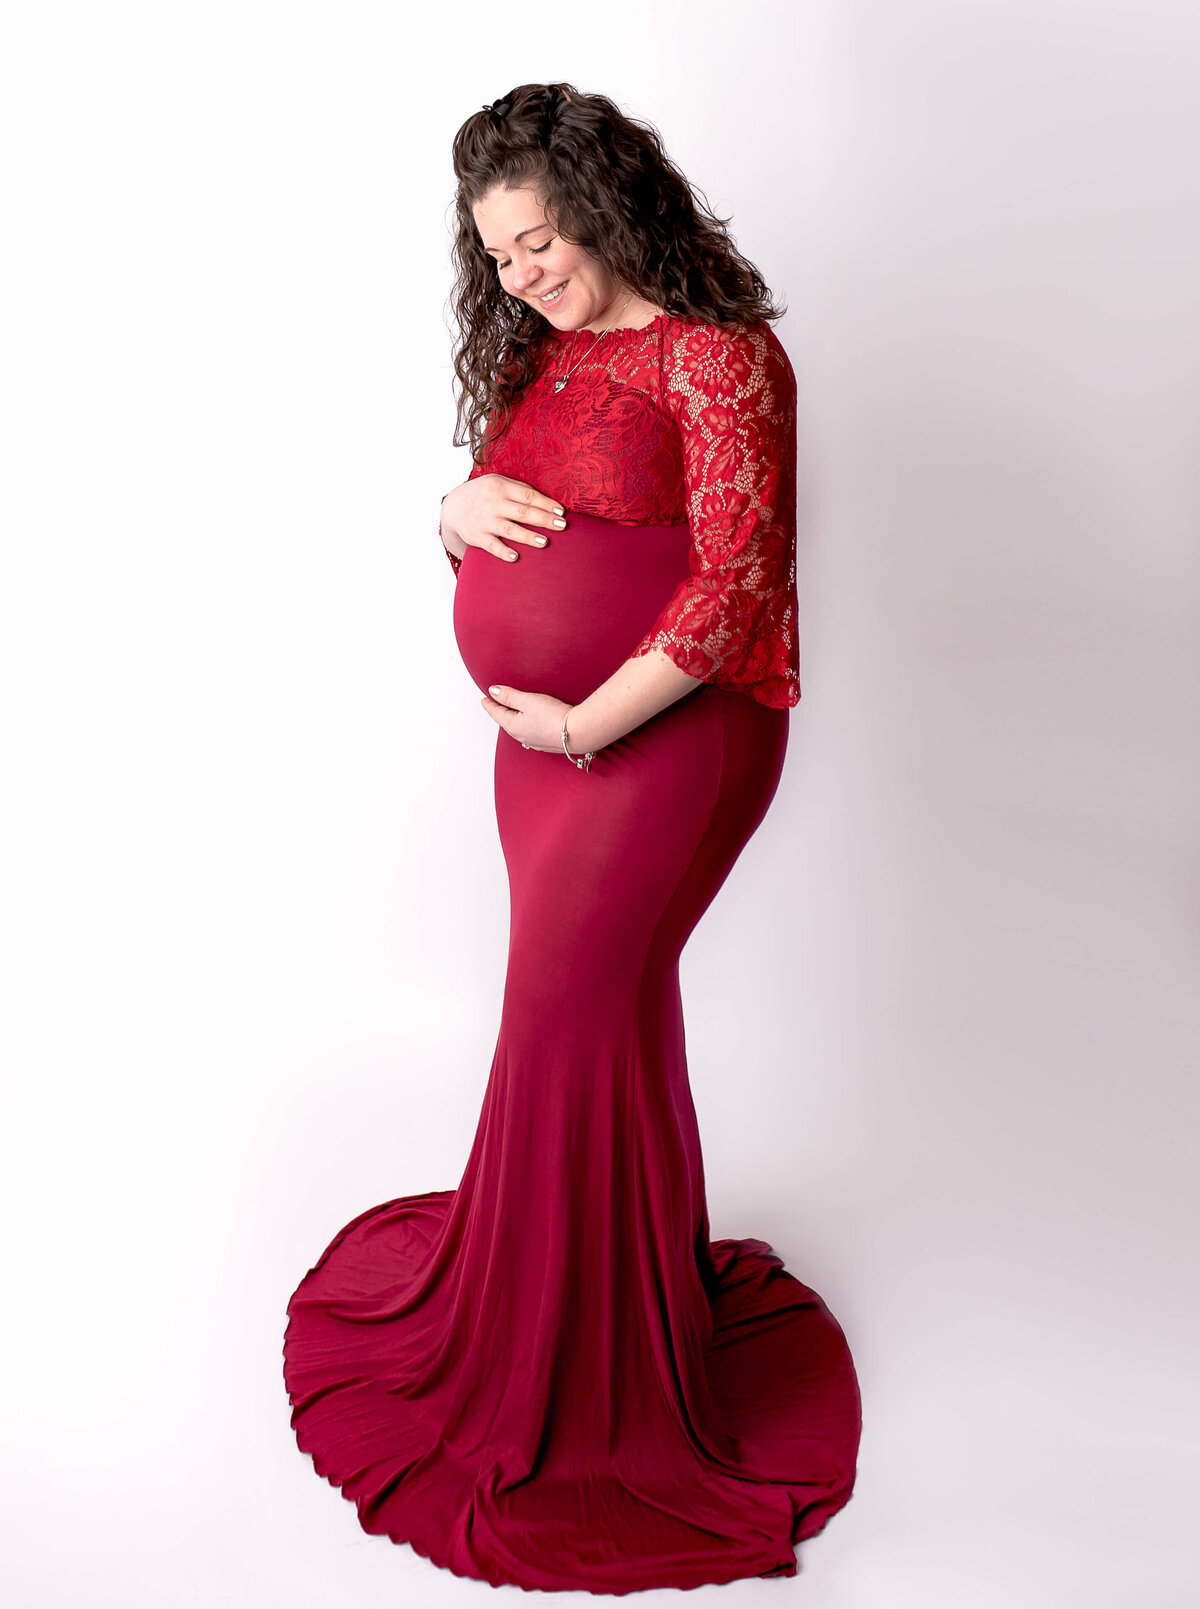 Akron maternity red dress in studio maternity.